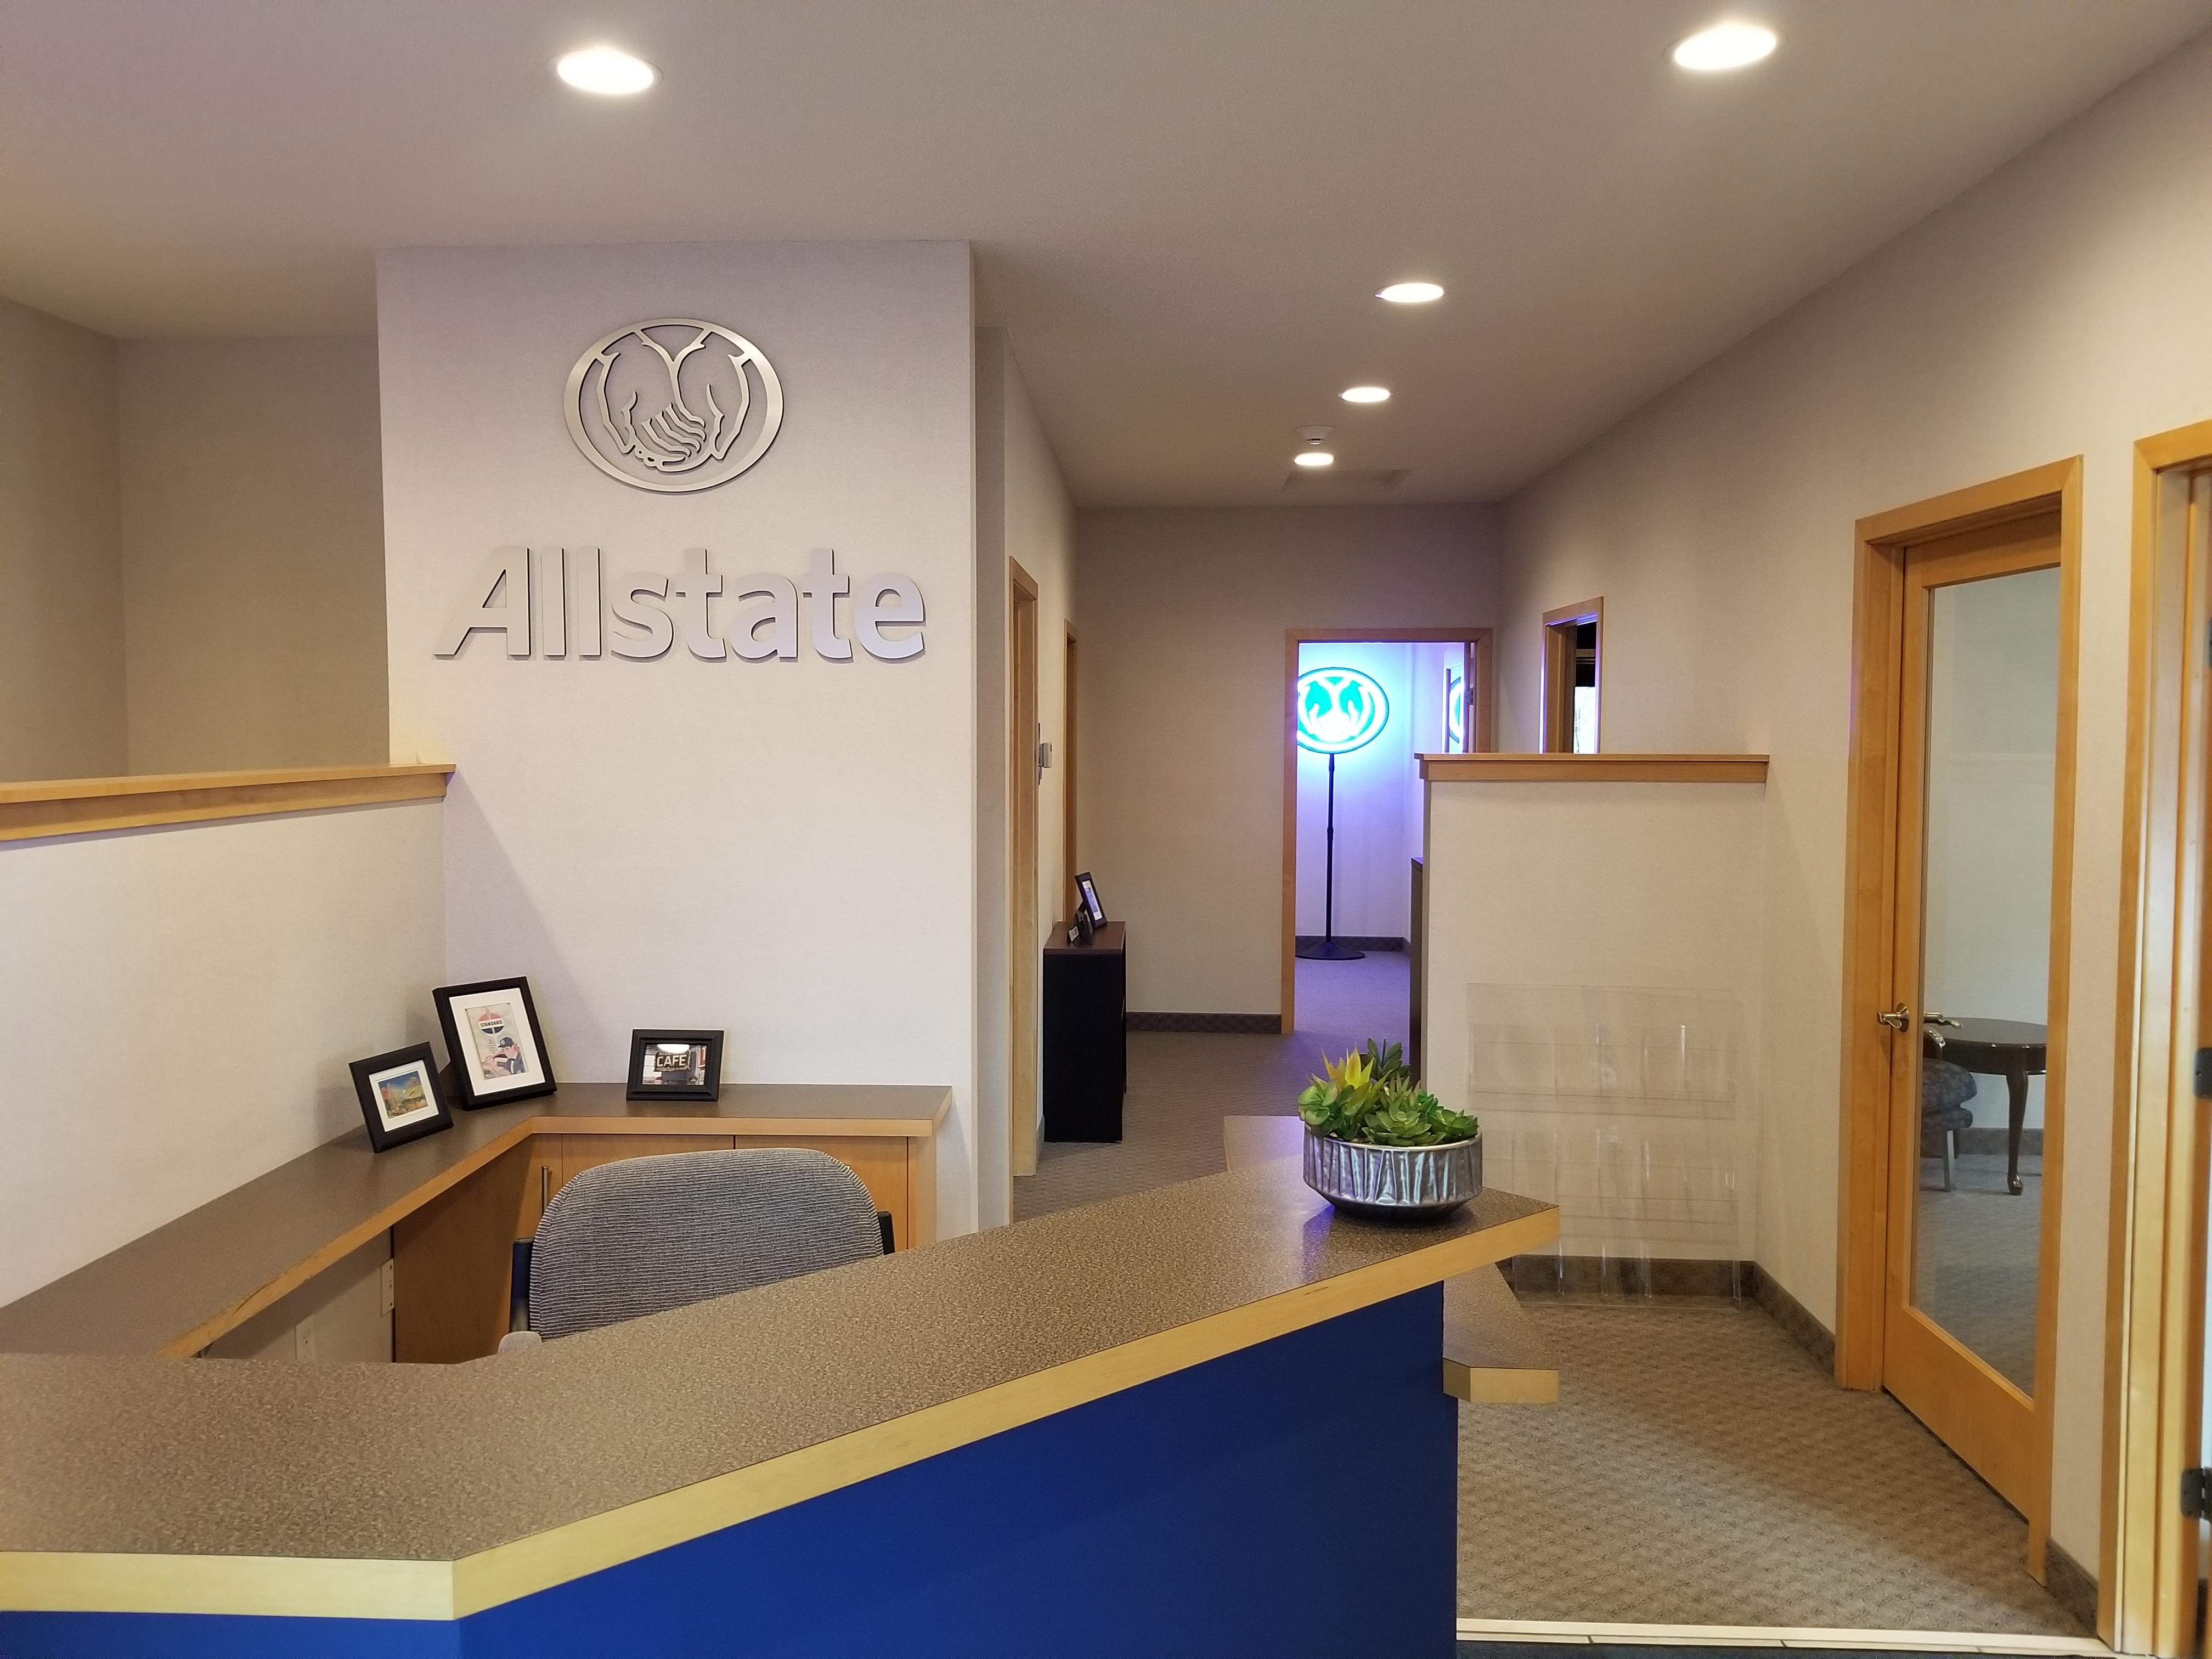 Joseph Ferris: Allstate Insurance Photo